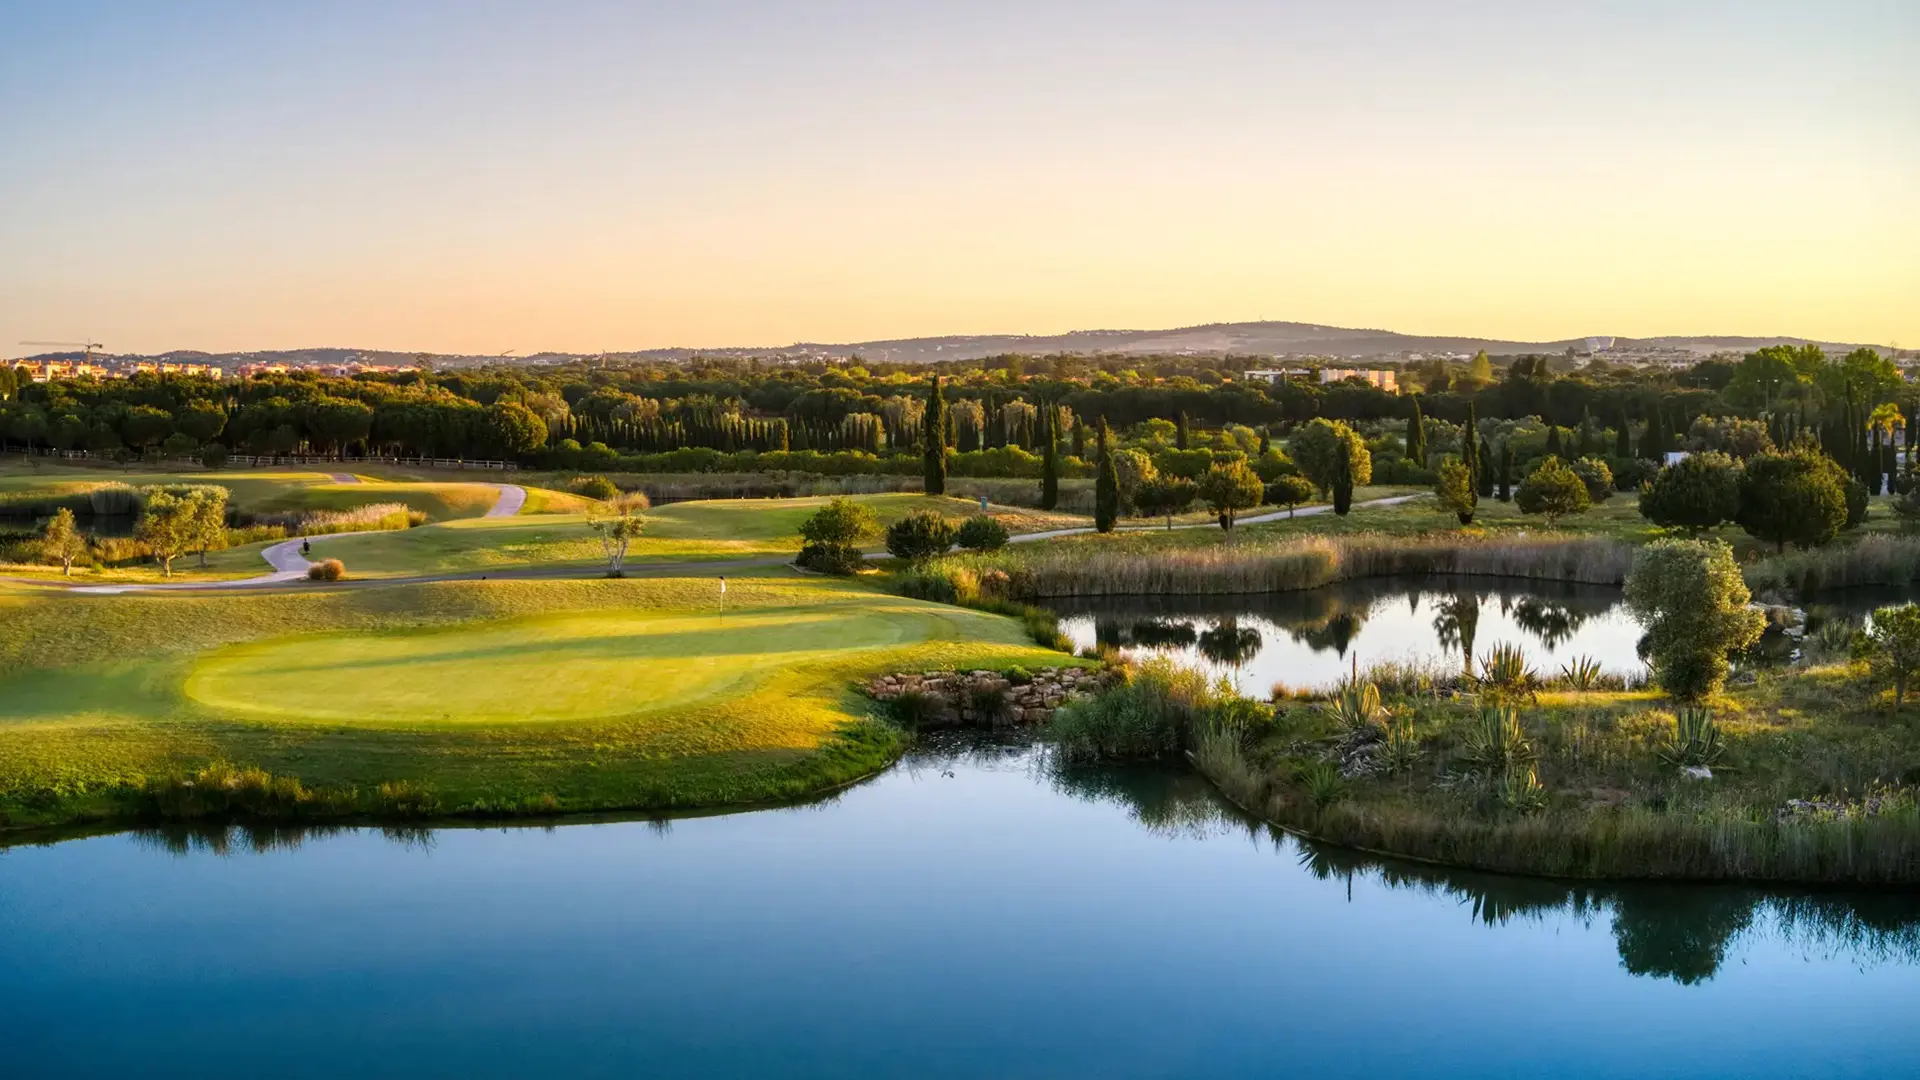 Portugal golf holidays - Palmares golf course algarve - Photo 1